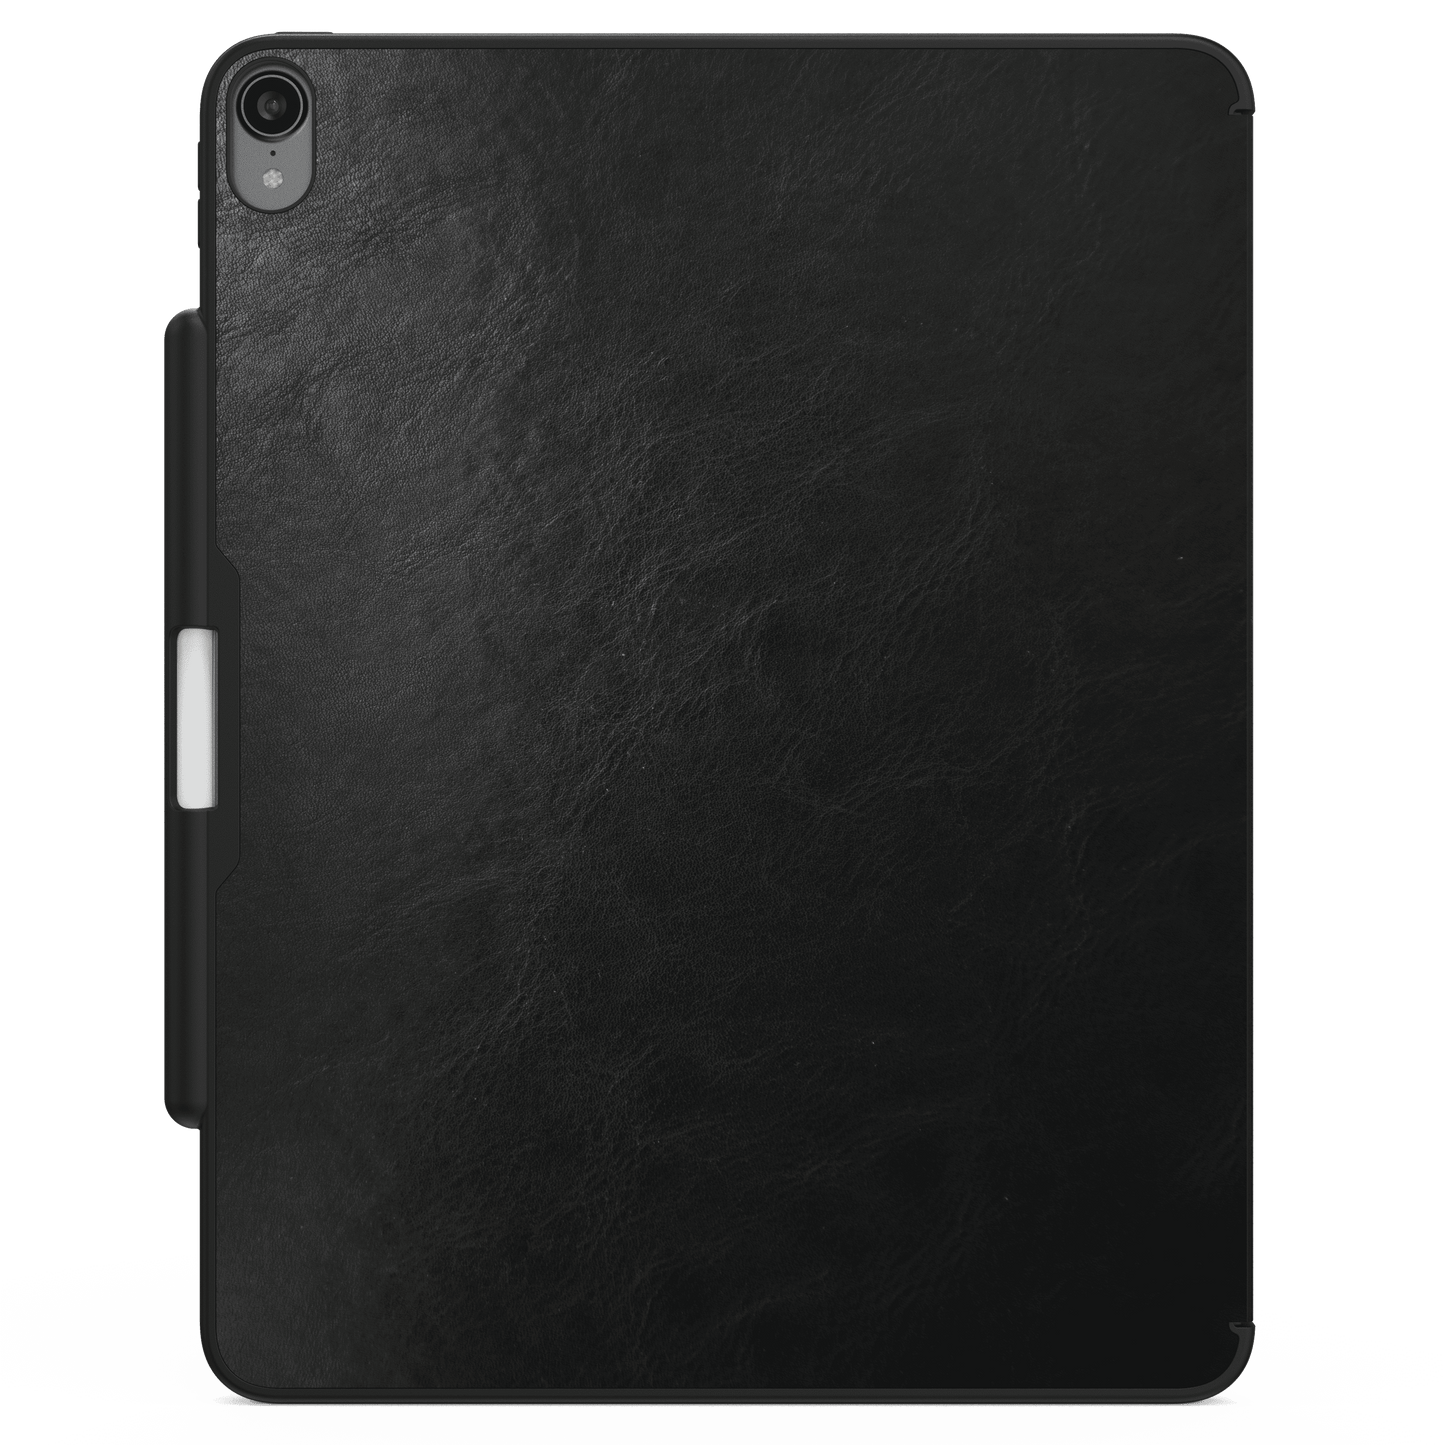 MoArmouz - Folio Smart Cover for iPad Pro 12.9-inch (2018) [Support Apple Pencil Charging]